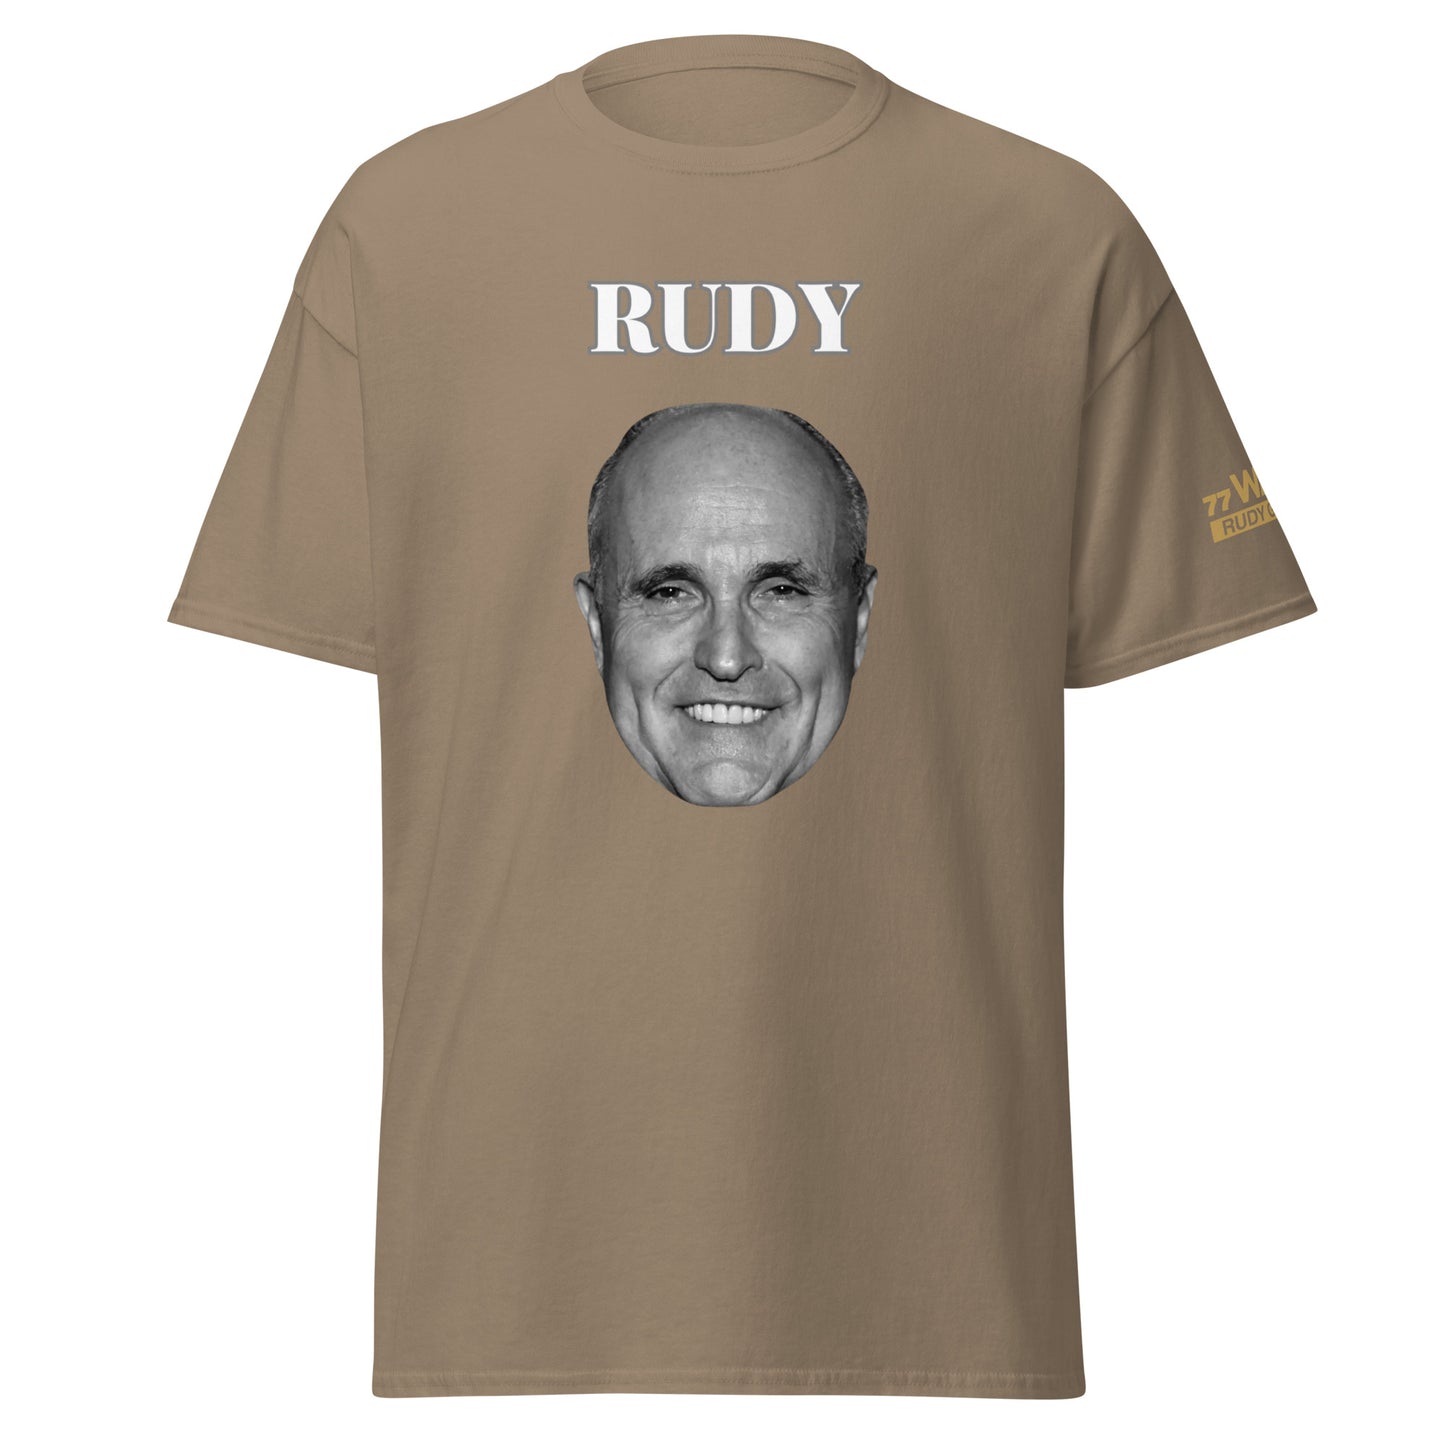 Rudy Cutout classic tee